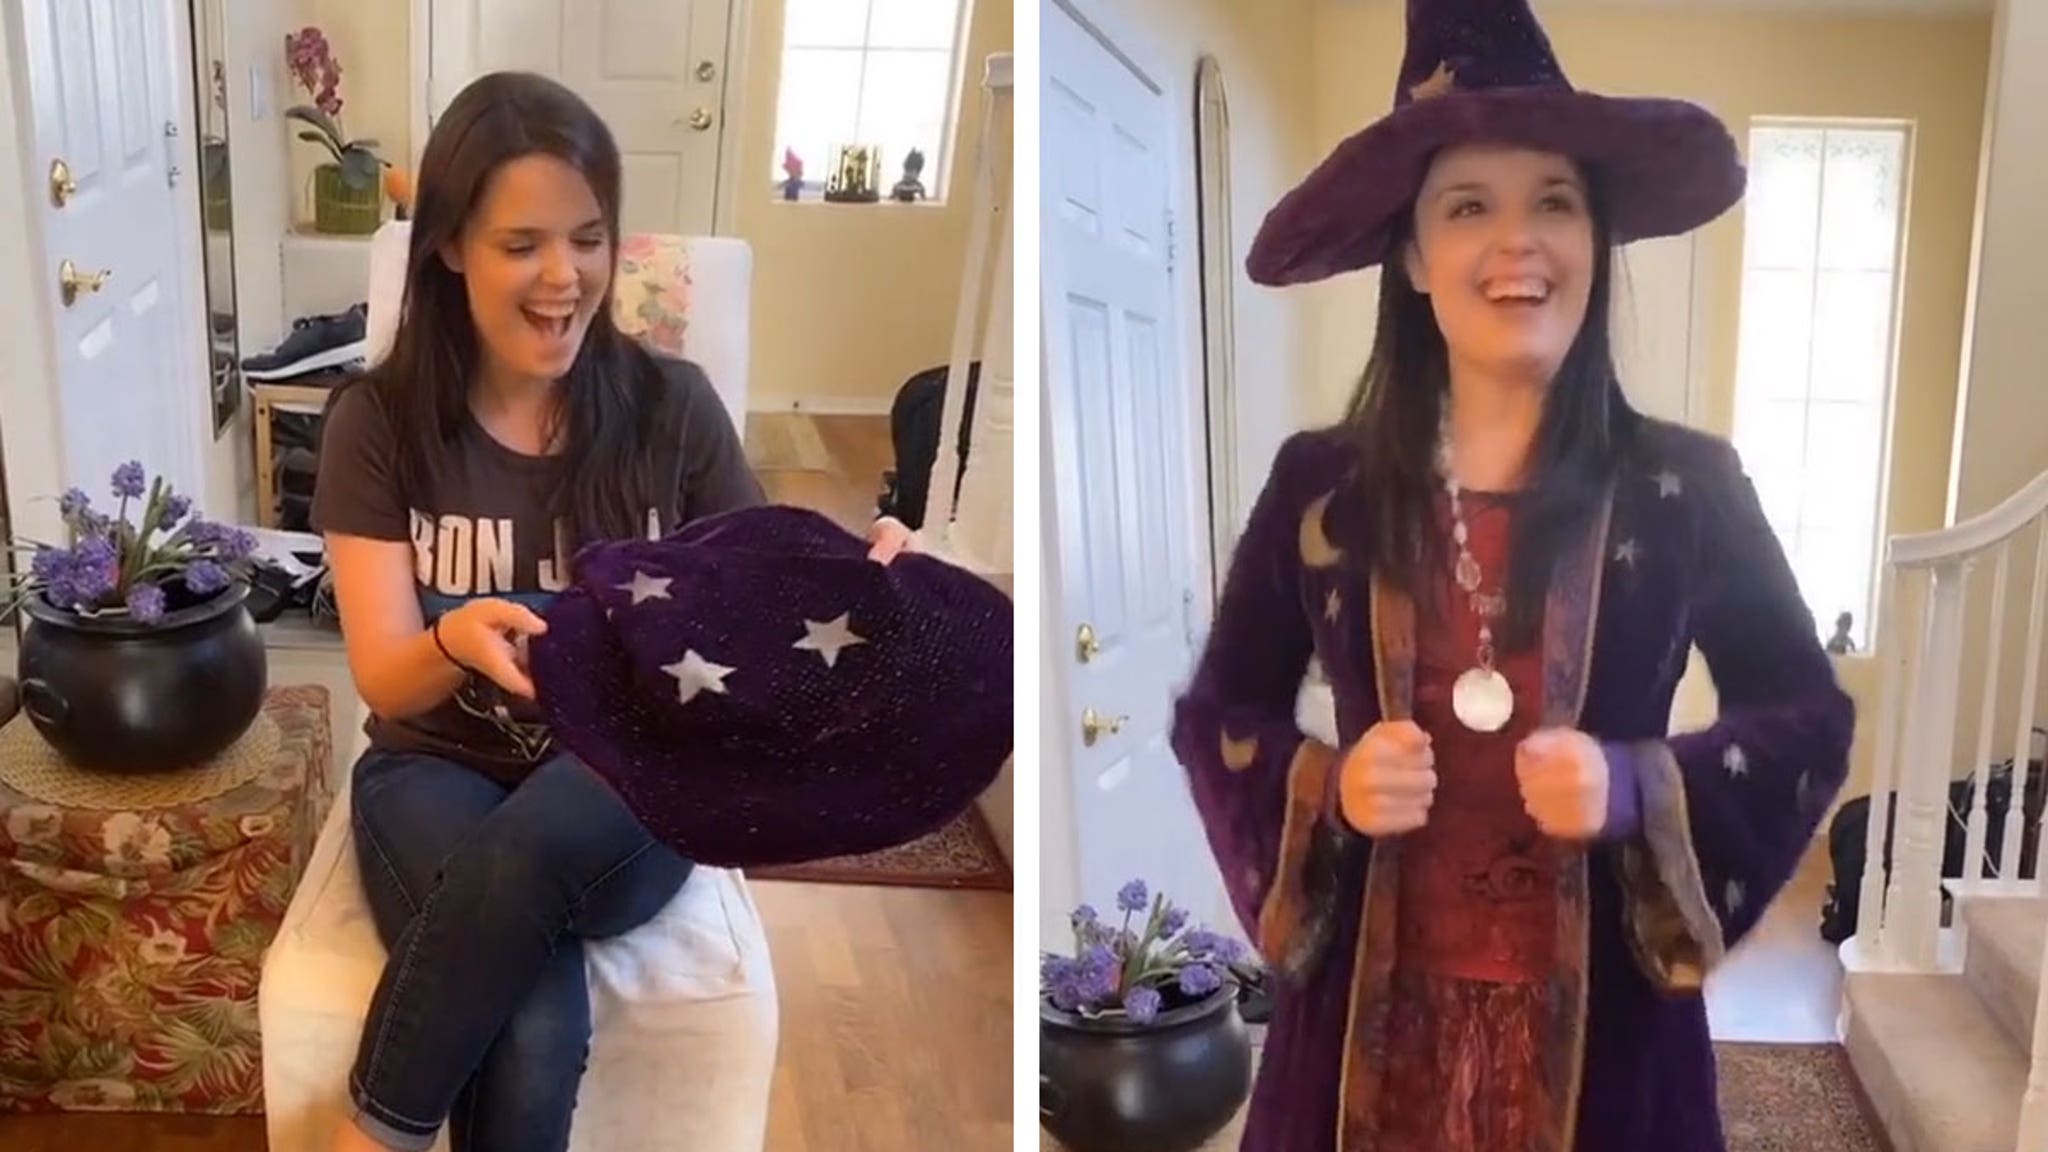 'Halloweentown' Star Kimberly J. Brown Recreates Witch Outfit on TikTok - TMZ